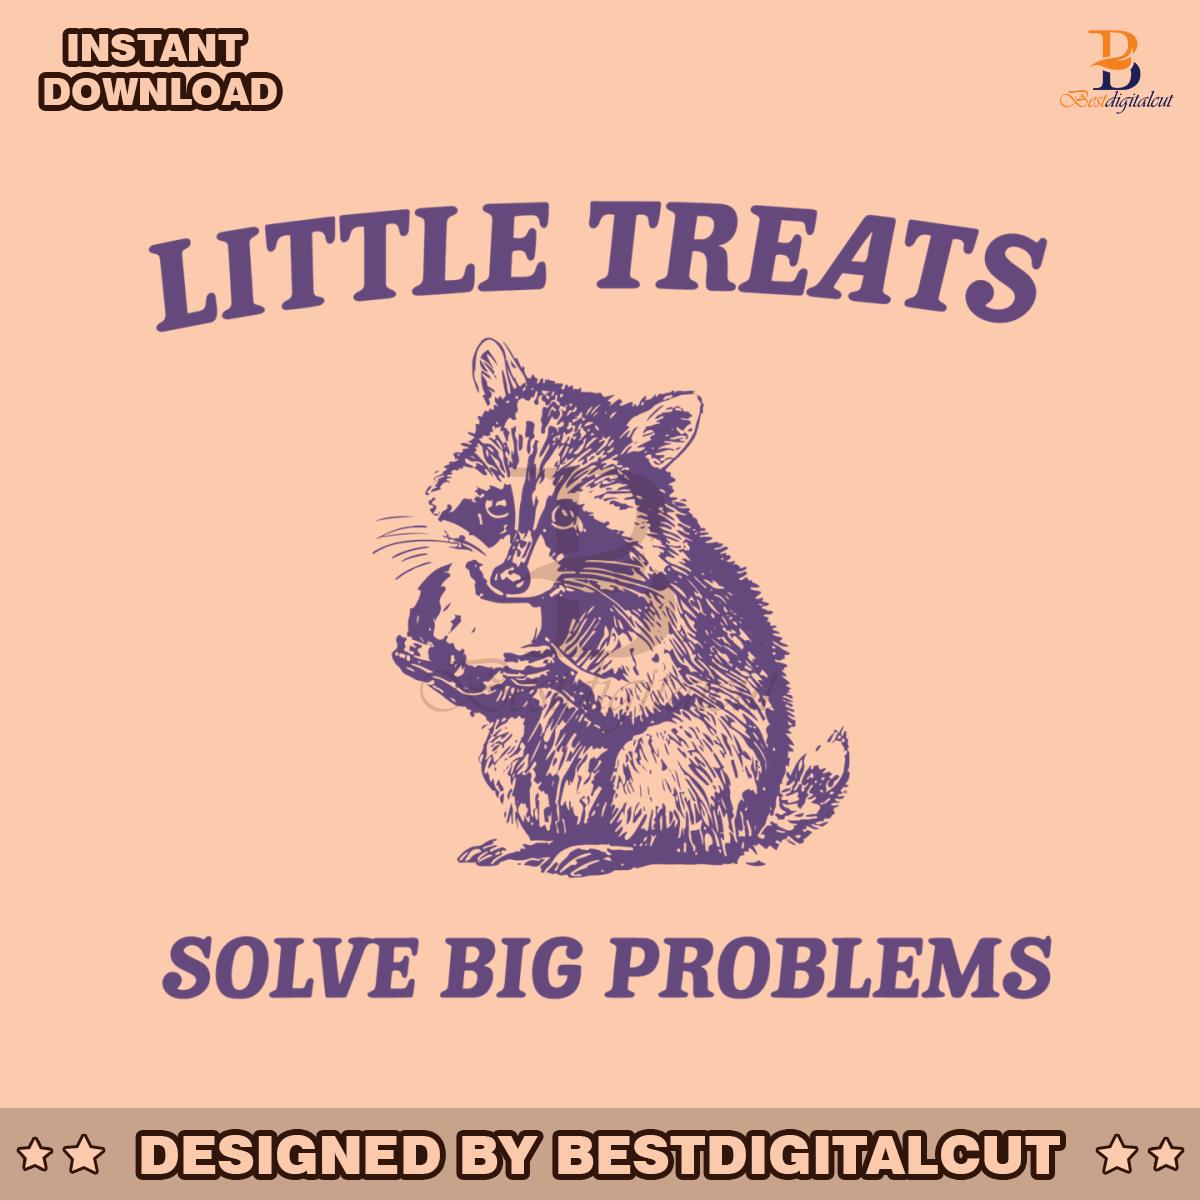 little-treats-solve-big-problems-svg